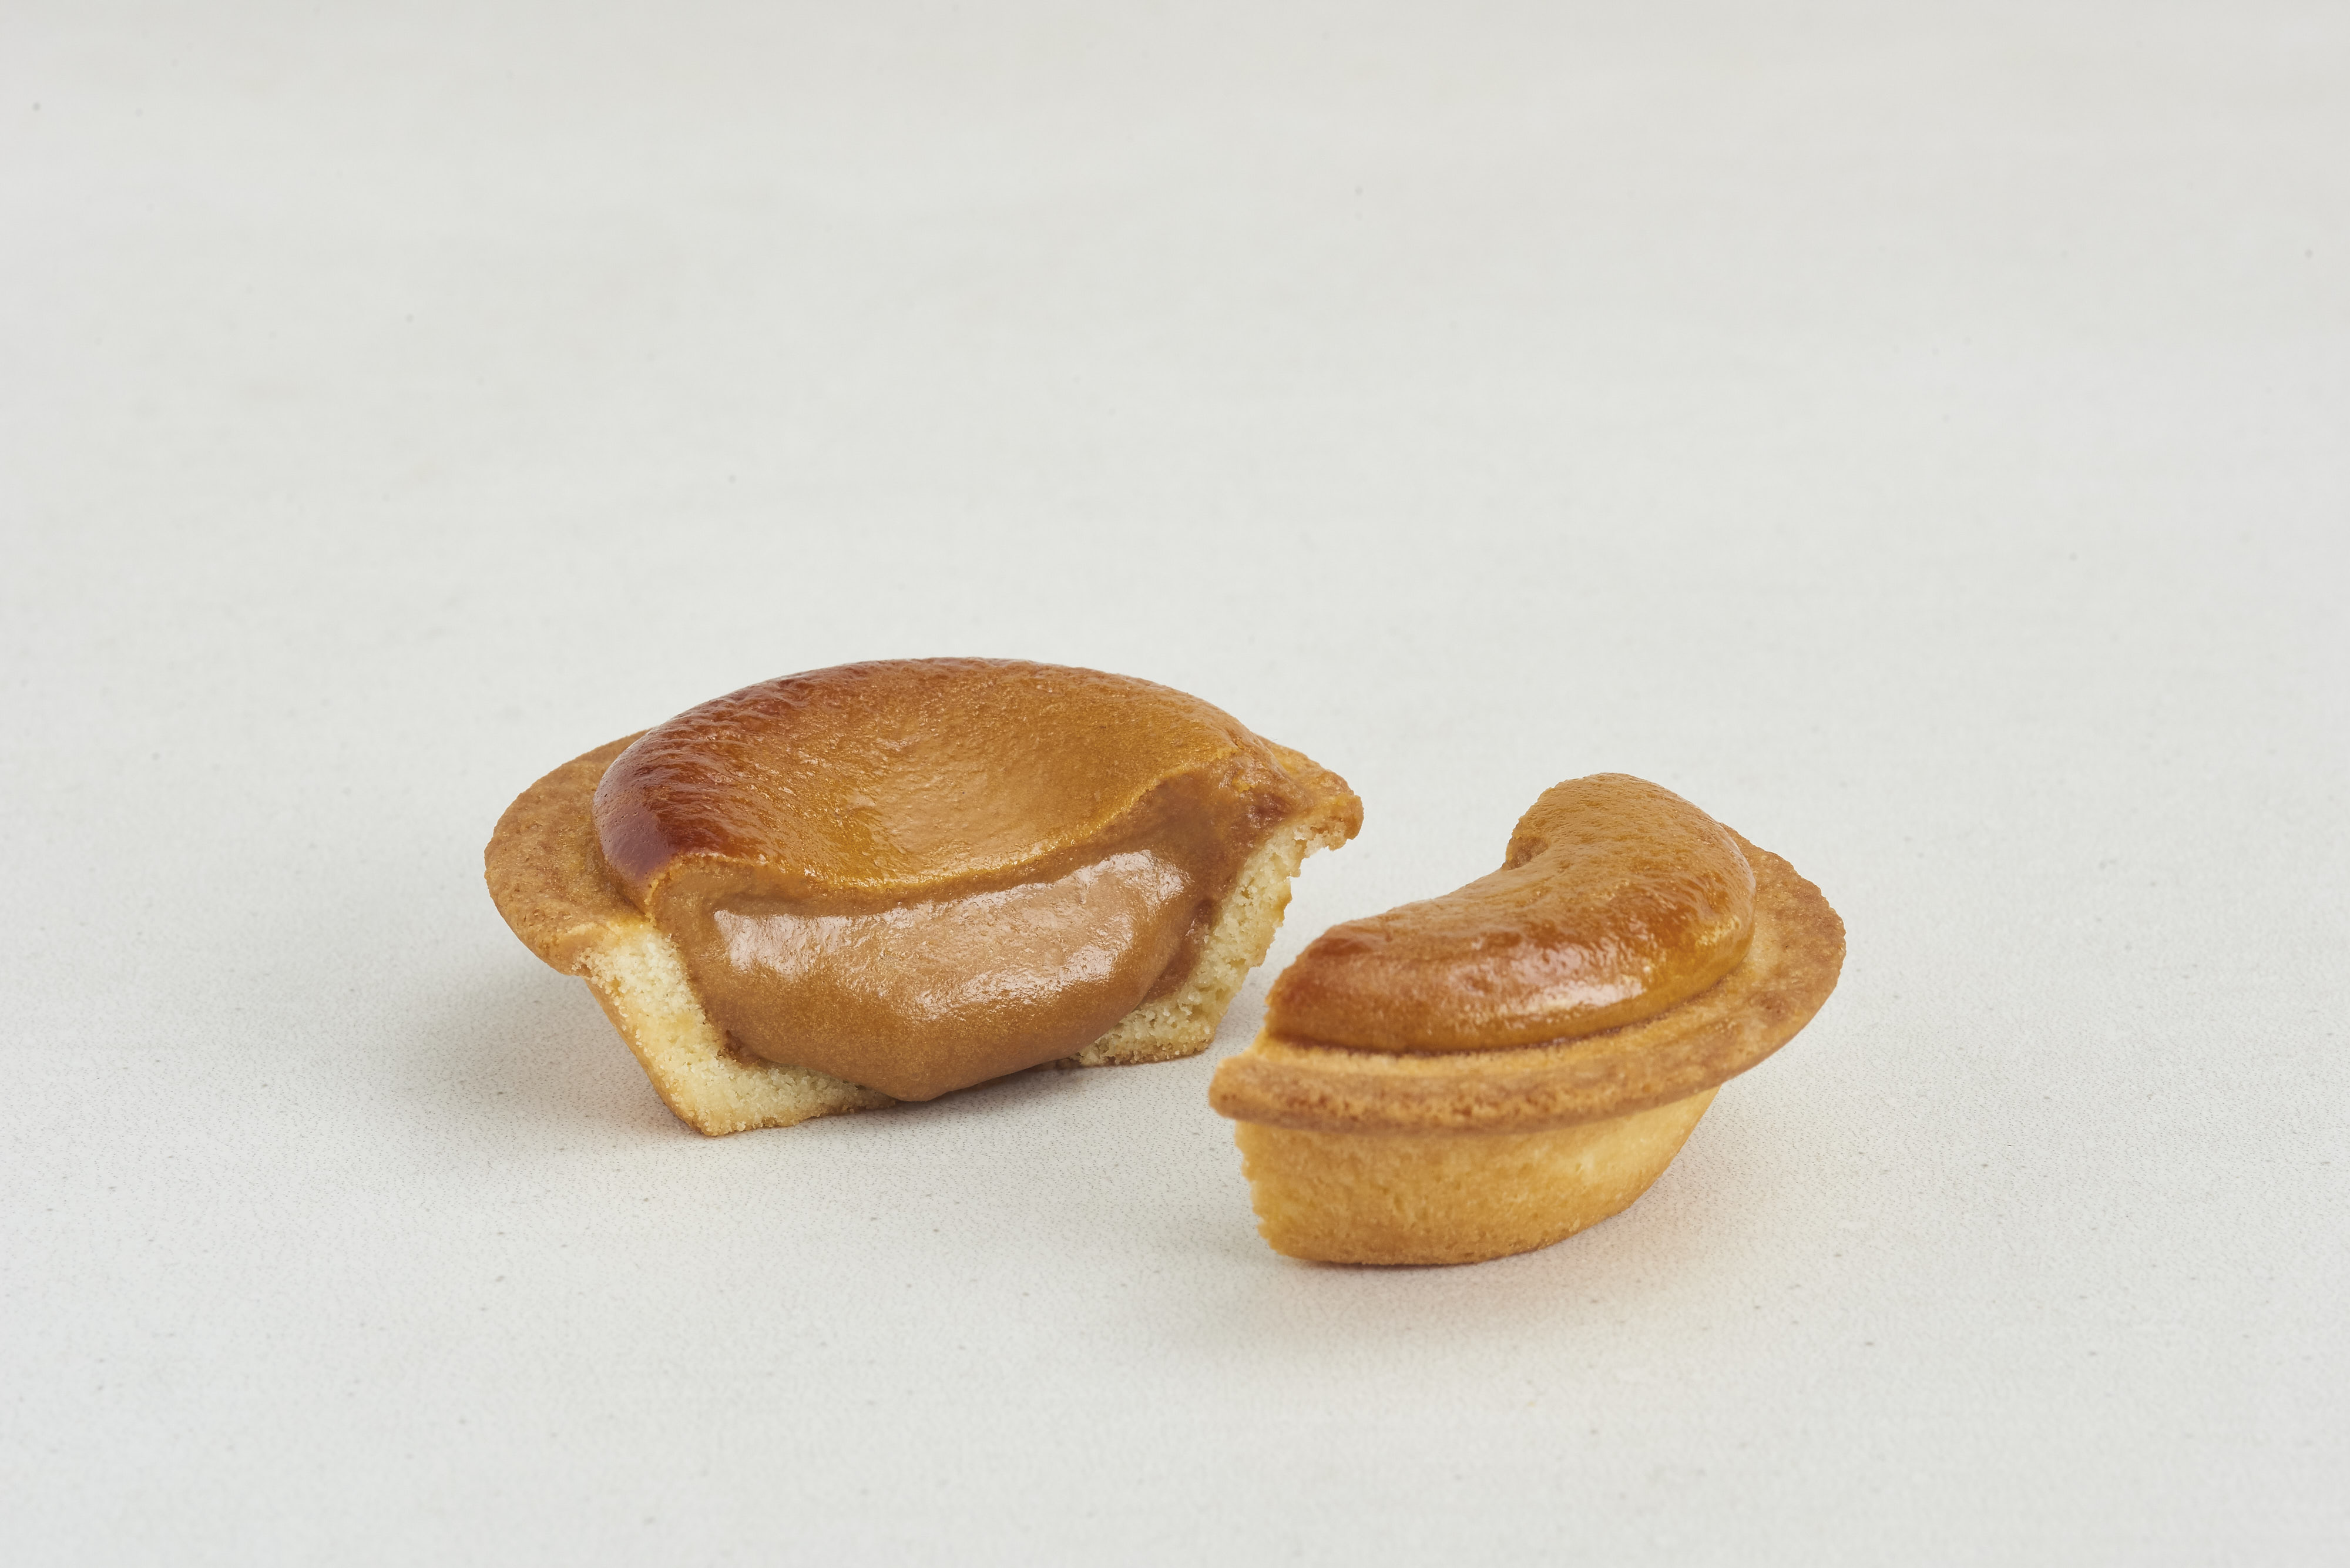 freshly-baked-caramel-cheese-tart-%e7%84%bc%e3%81%8d%e3%81%9f%e3%81%a6%e3%82%ad%e3%83%a3%e3%83%a9%e3%83%a1%e3%83%ab%e3%83%81%e3%83%bc%e3%82%ba%e3%82%bf%e3%83%ab%e3%83%885